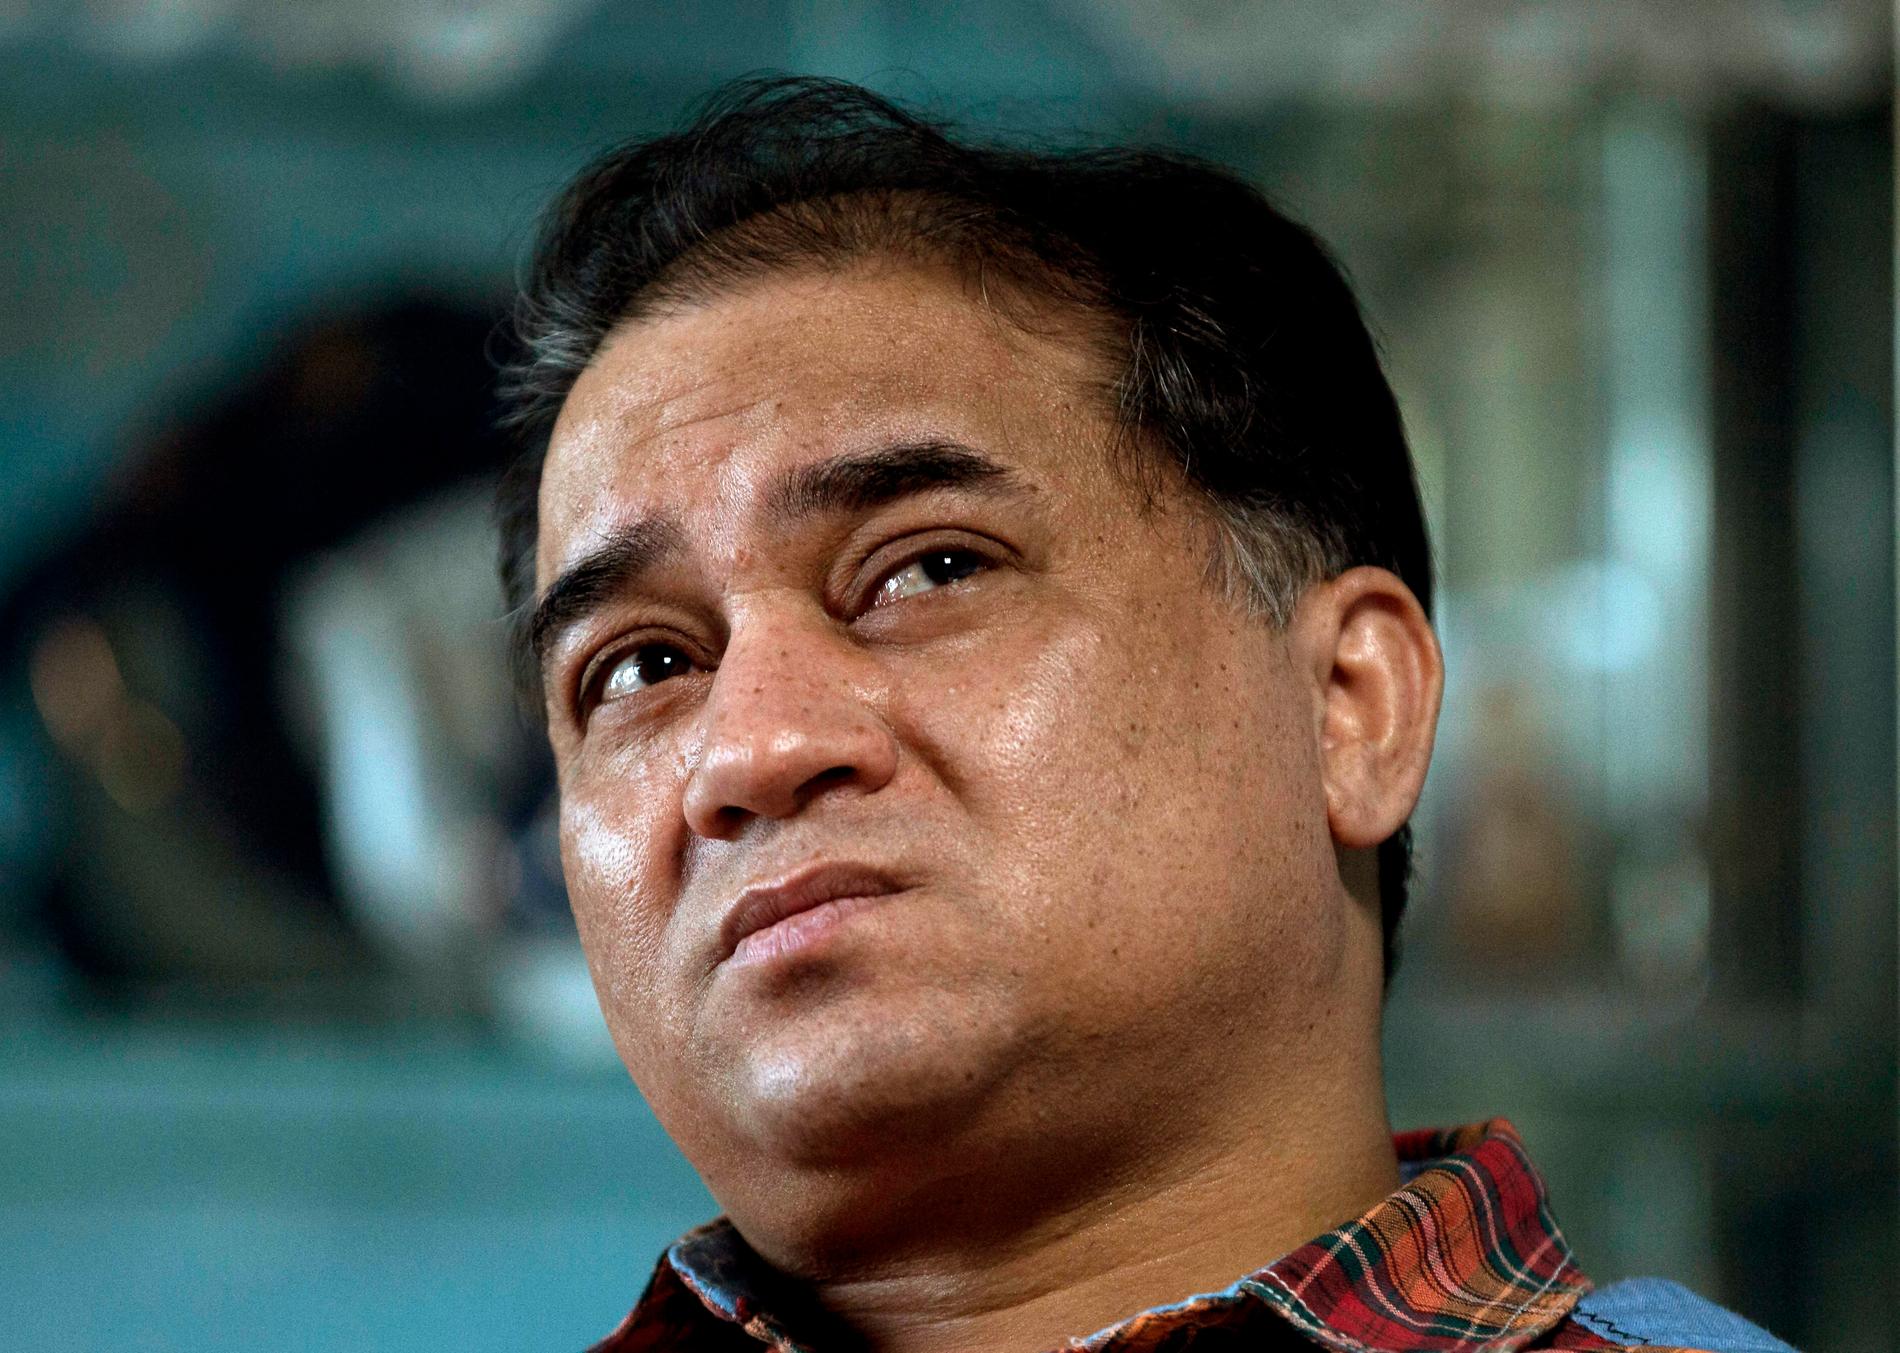 Uiguraktivisten Ilham Tohti har tilldelats Europarådets Havel-pris. Arkivfoto.